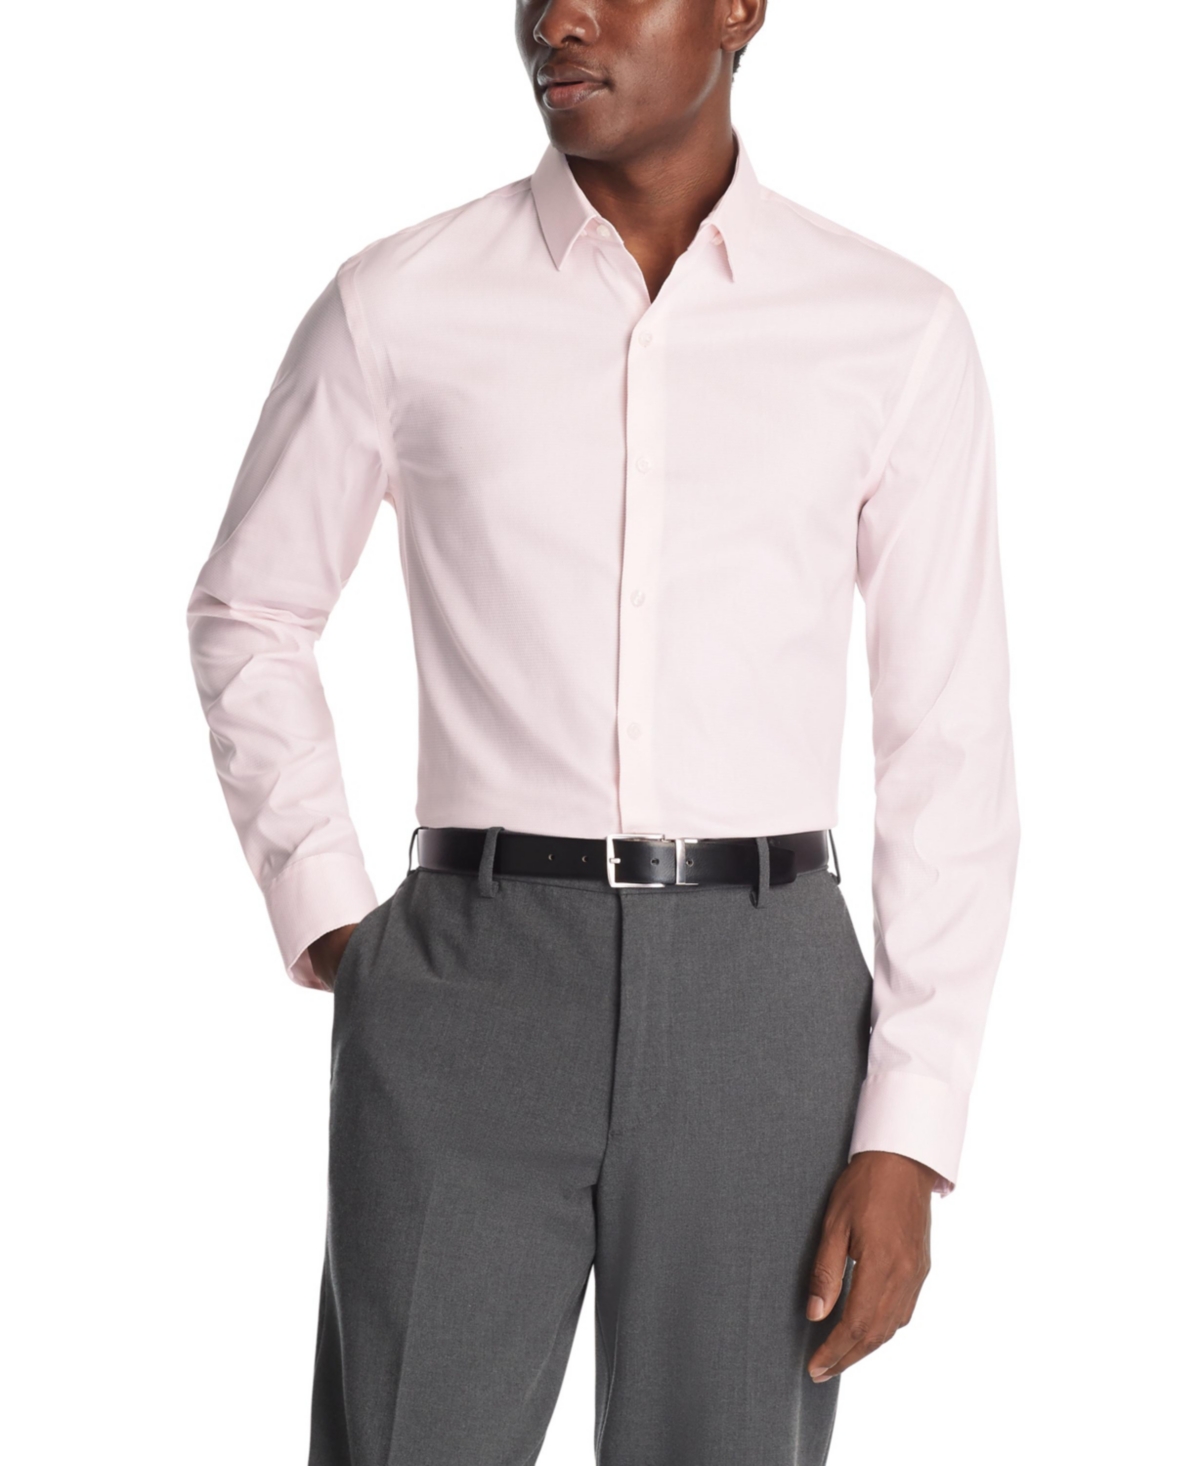 Men's Extra-Slim Fit Dress Shirt - Coral